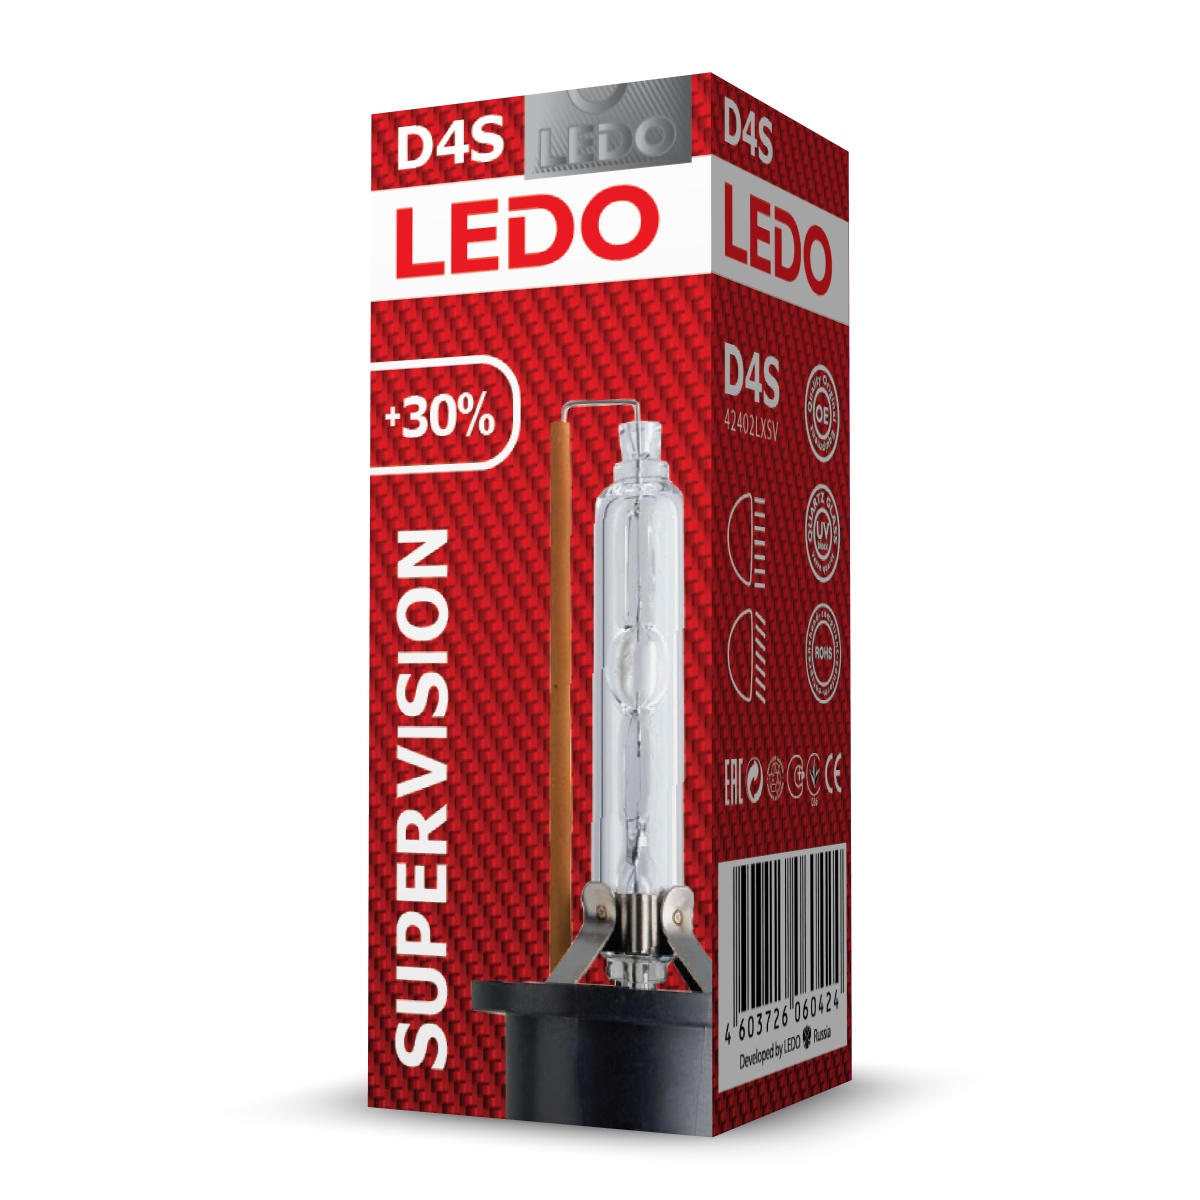 Лампа D4S 4300K LEDO SuperVision +30%